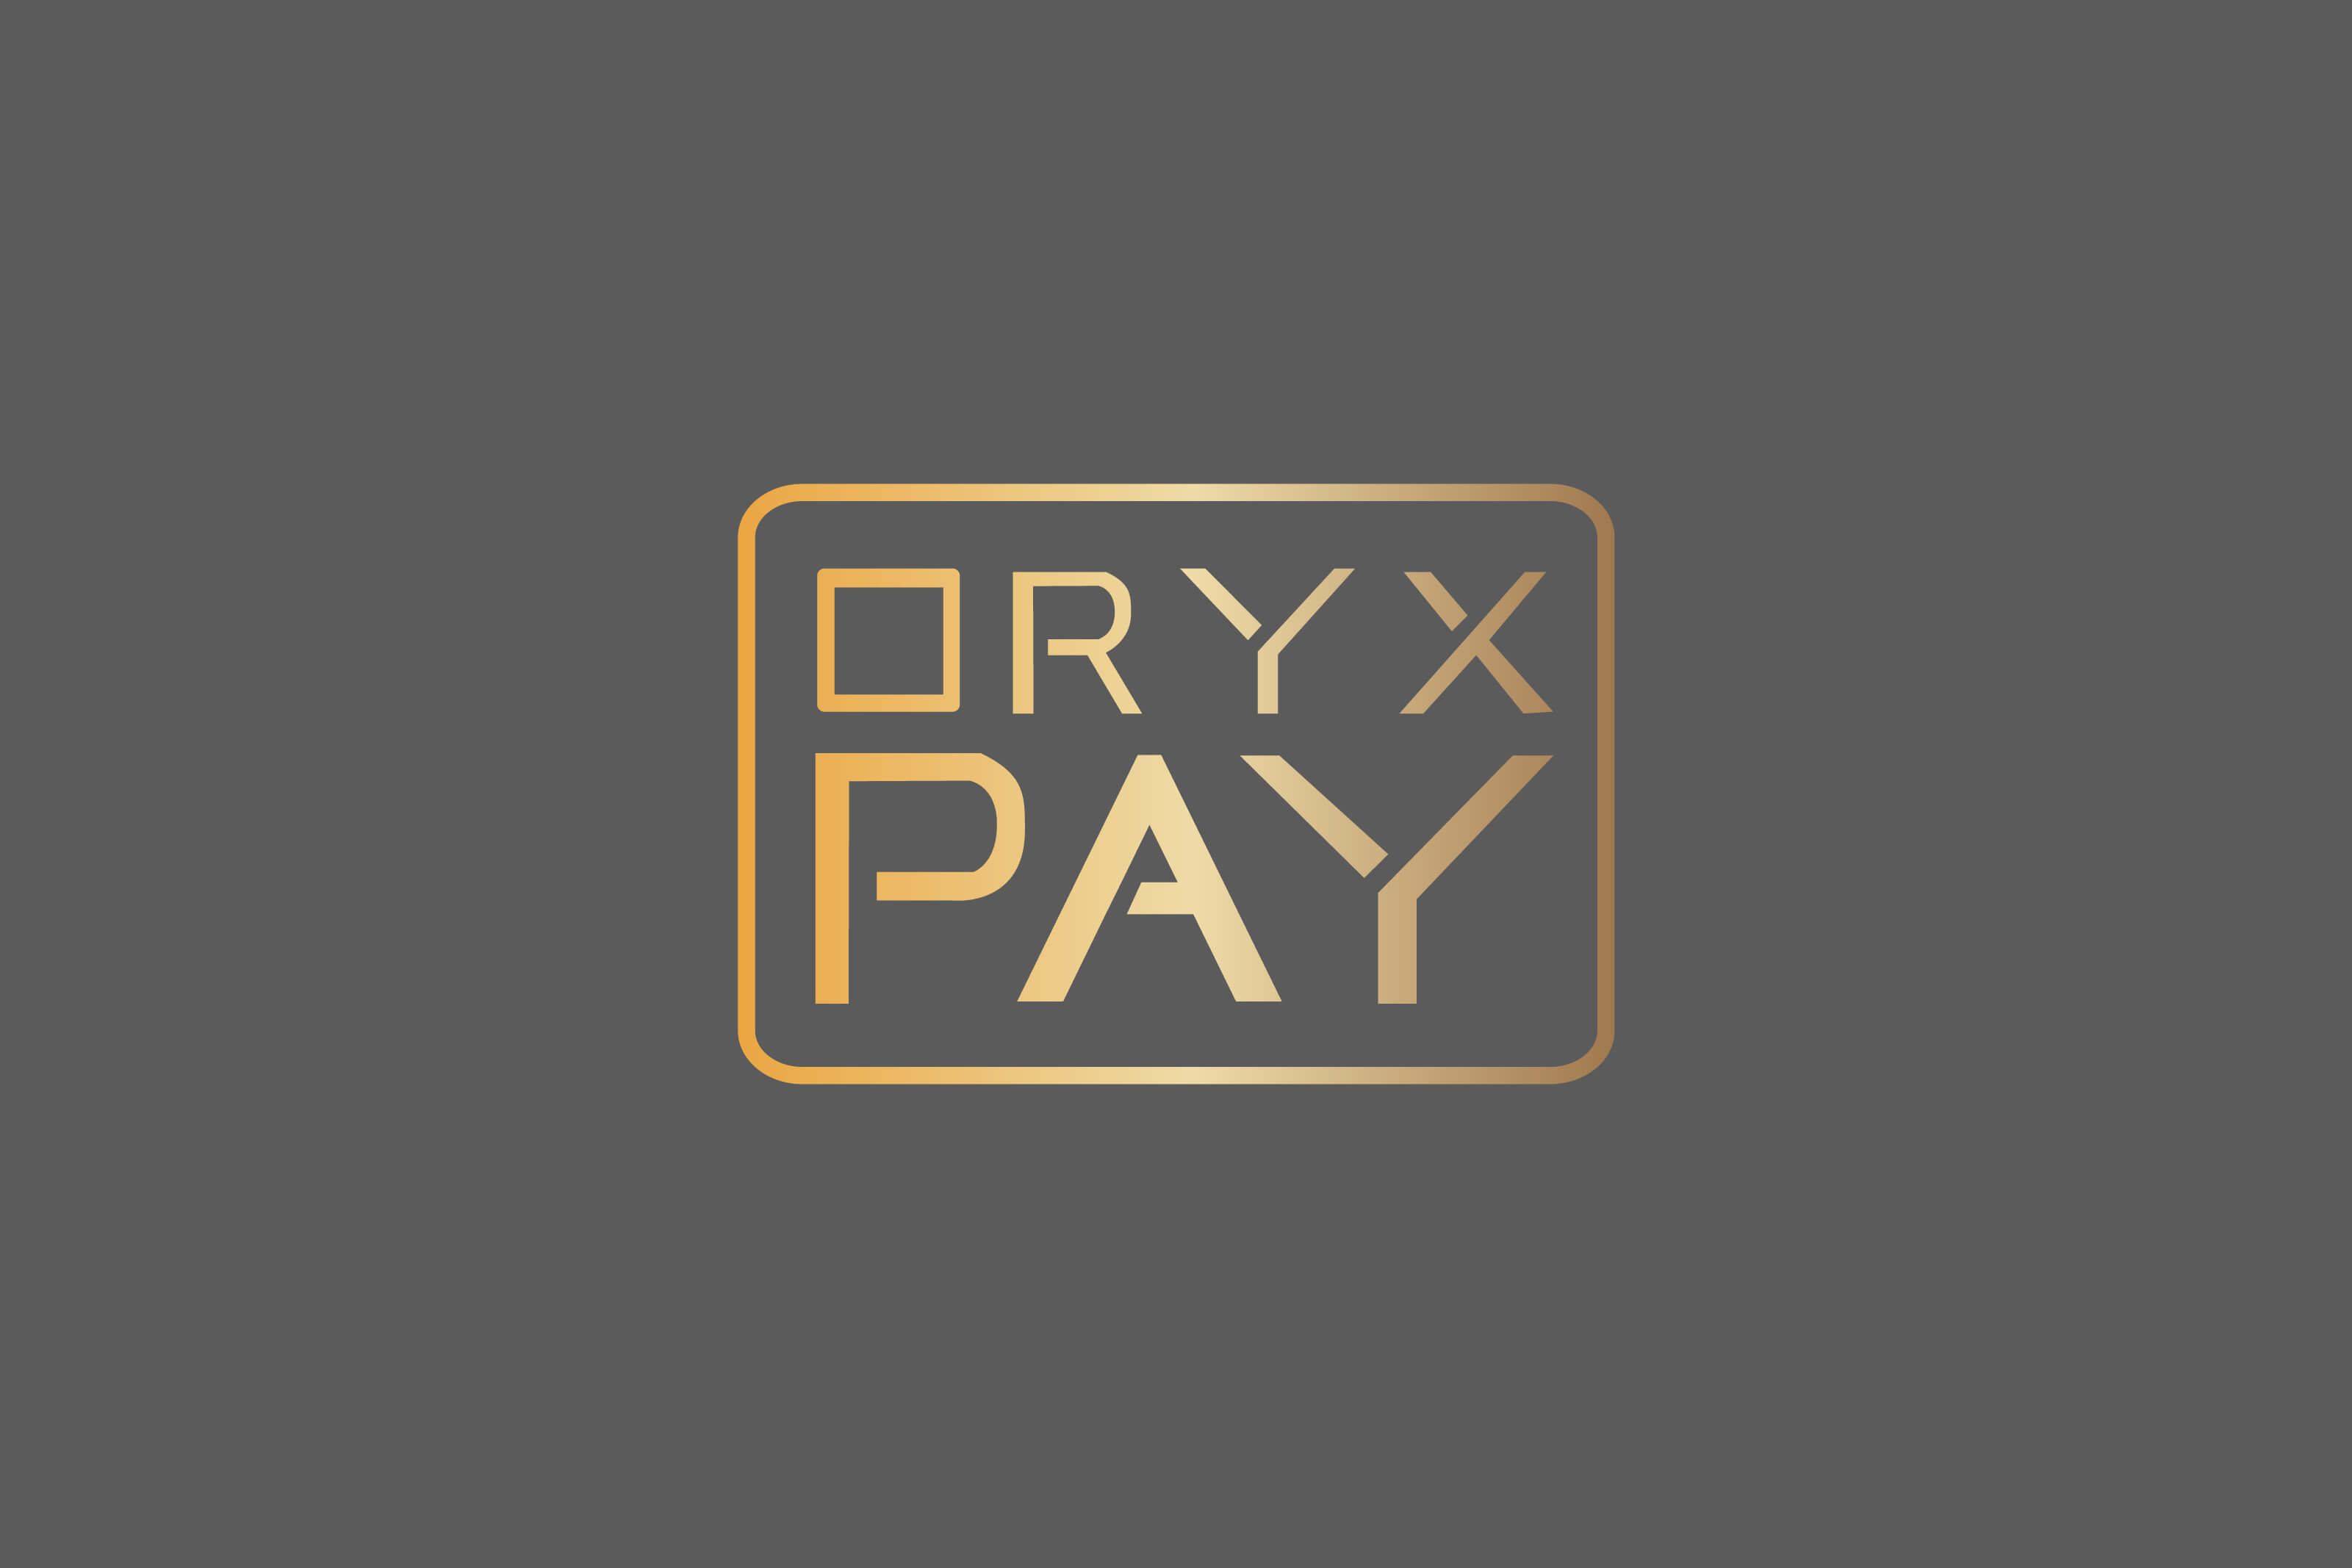 Oryxpay